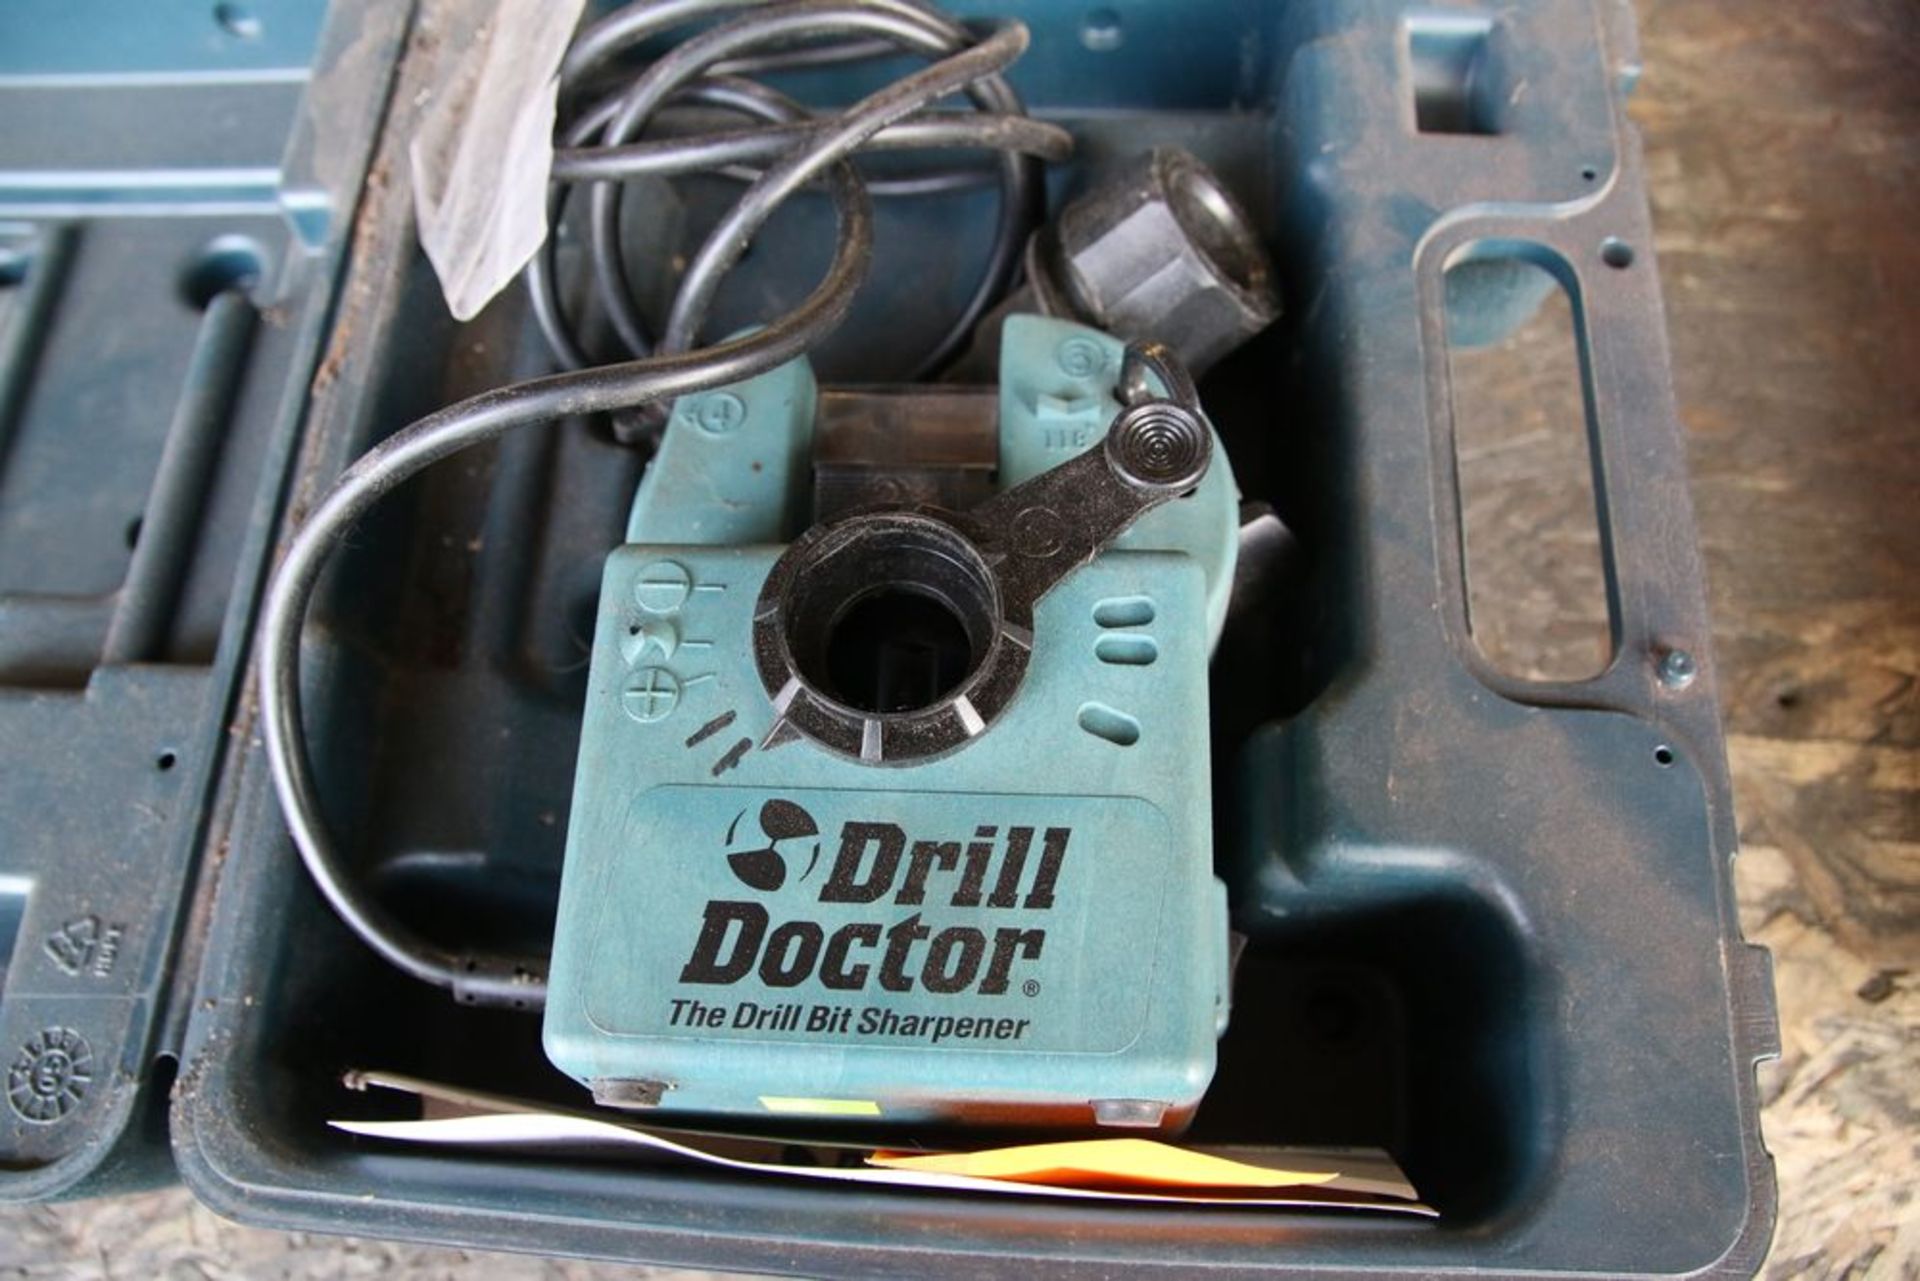 Drill Doctor Drill Bit Sharpener - Image 2 of 2